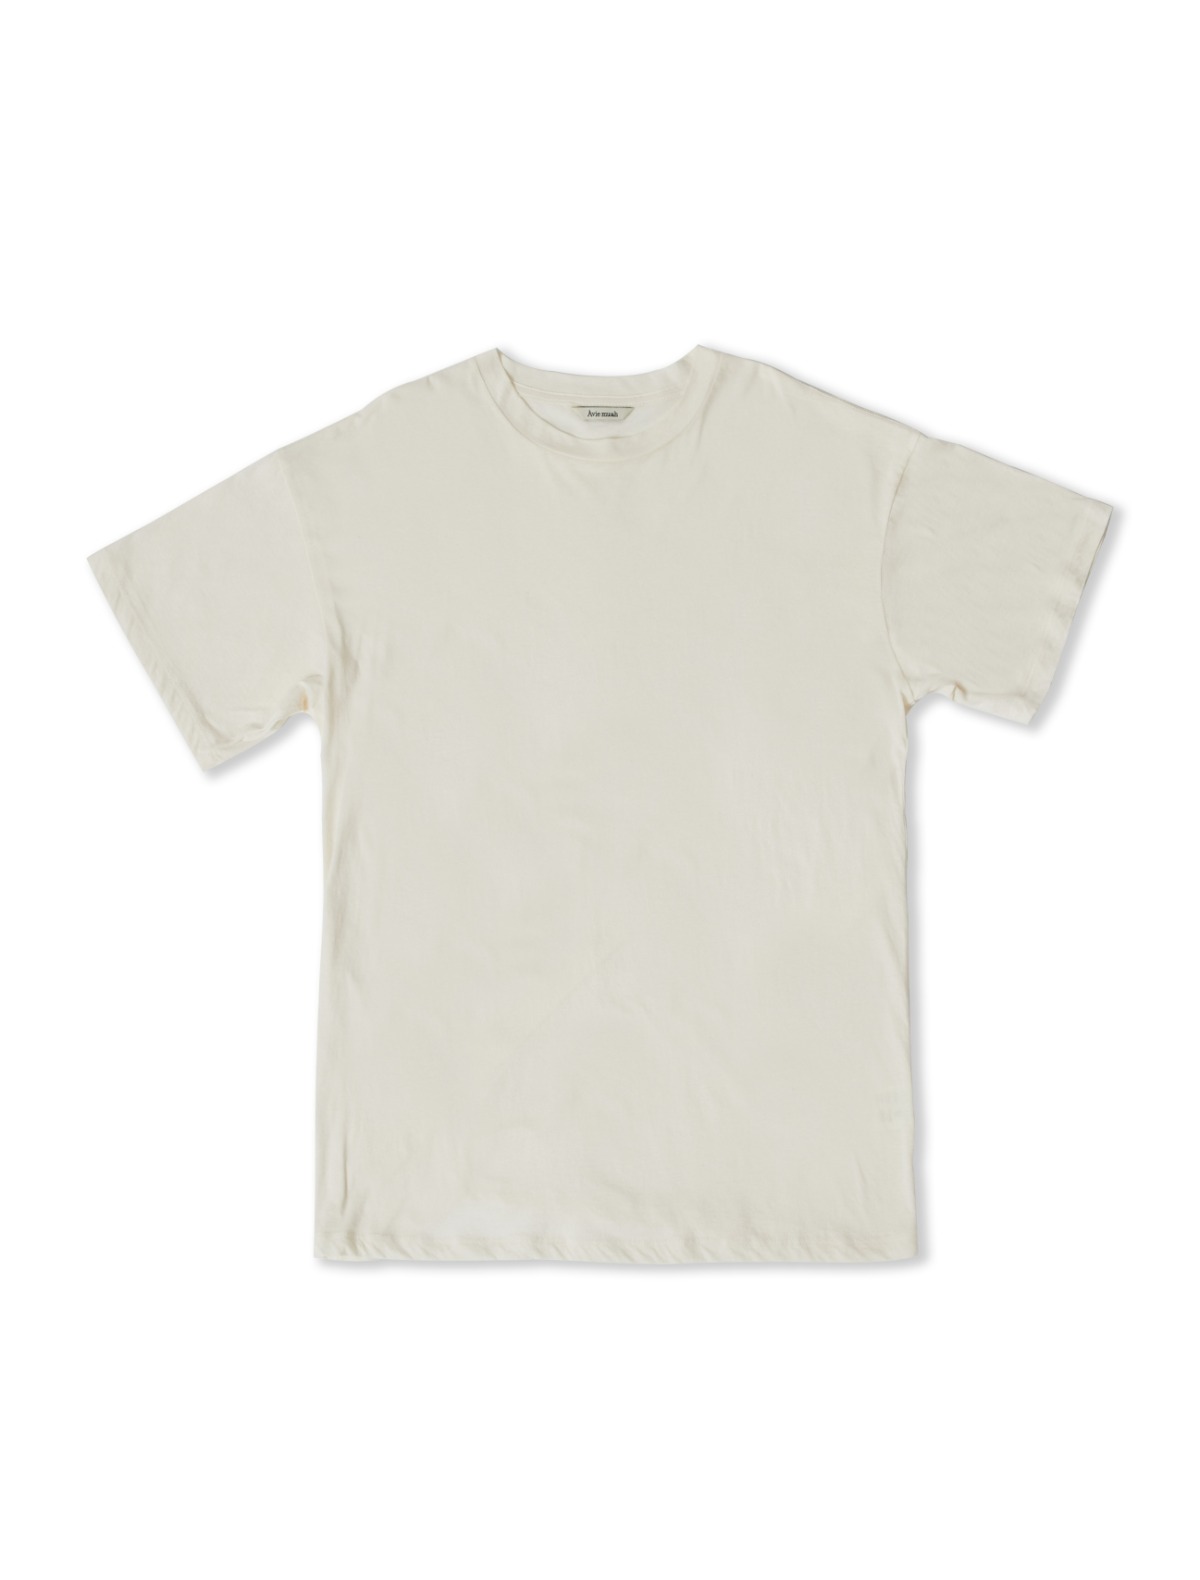 Cotton Long T-Shirt (Cream)